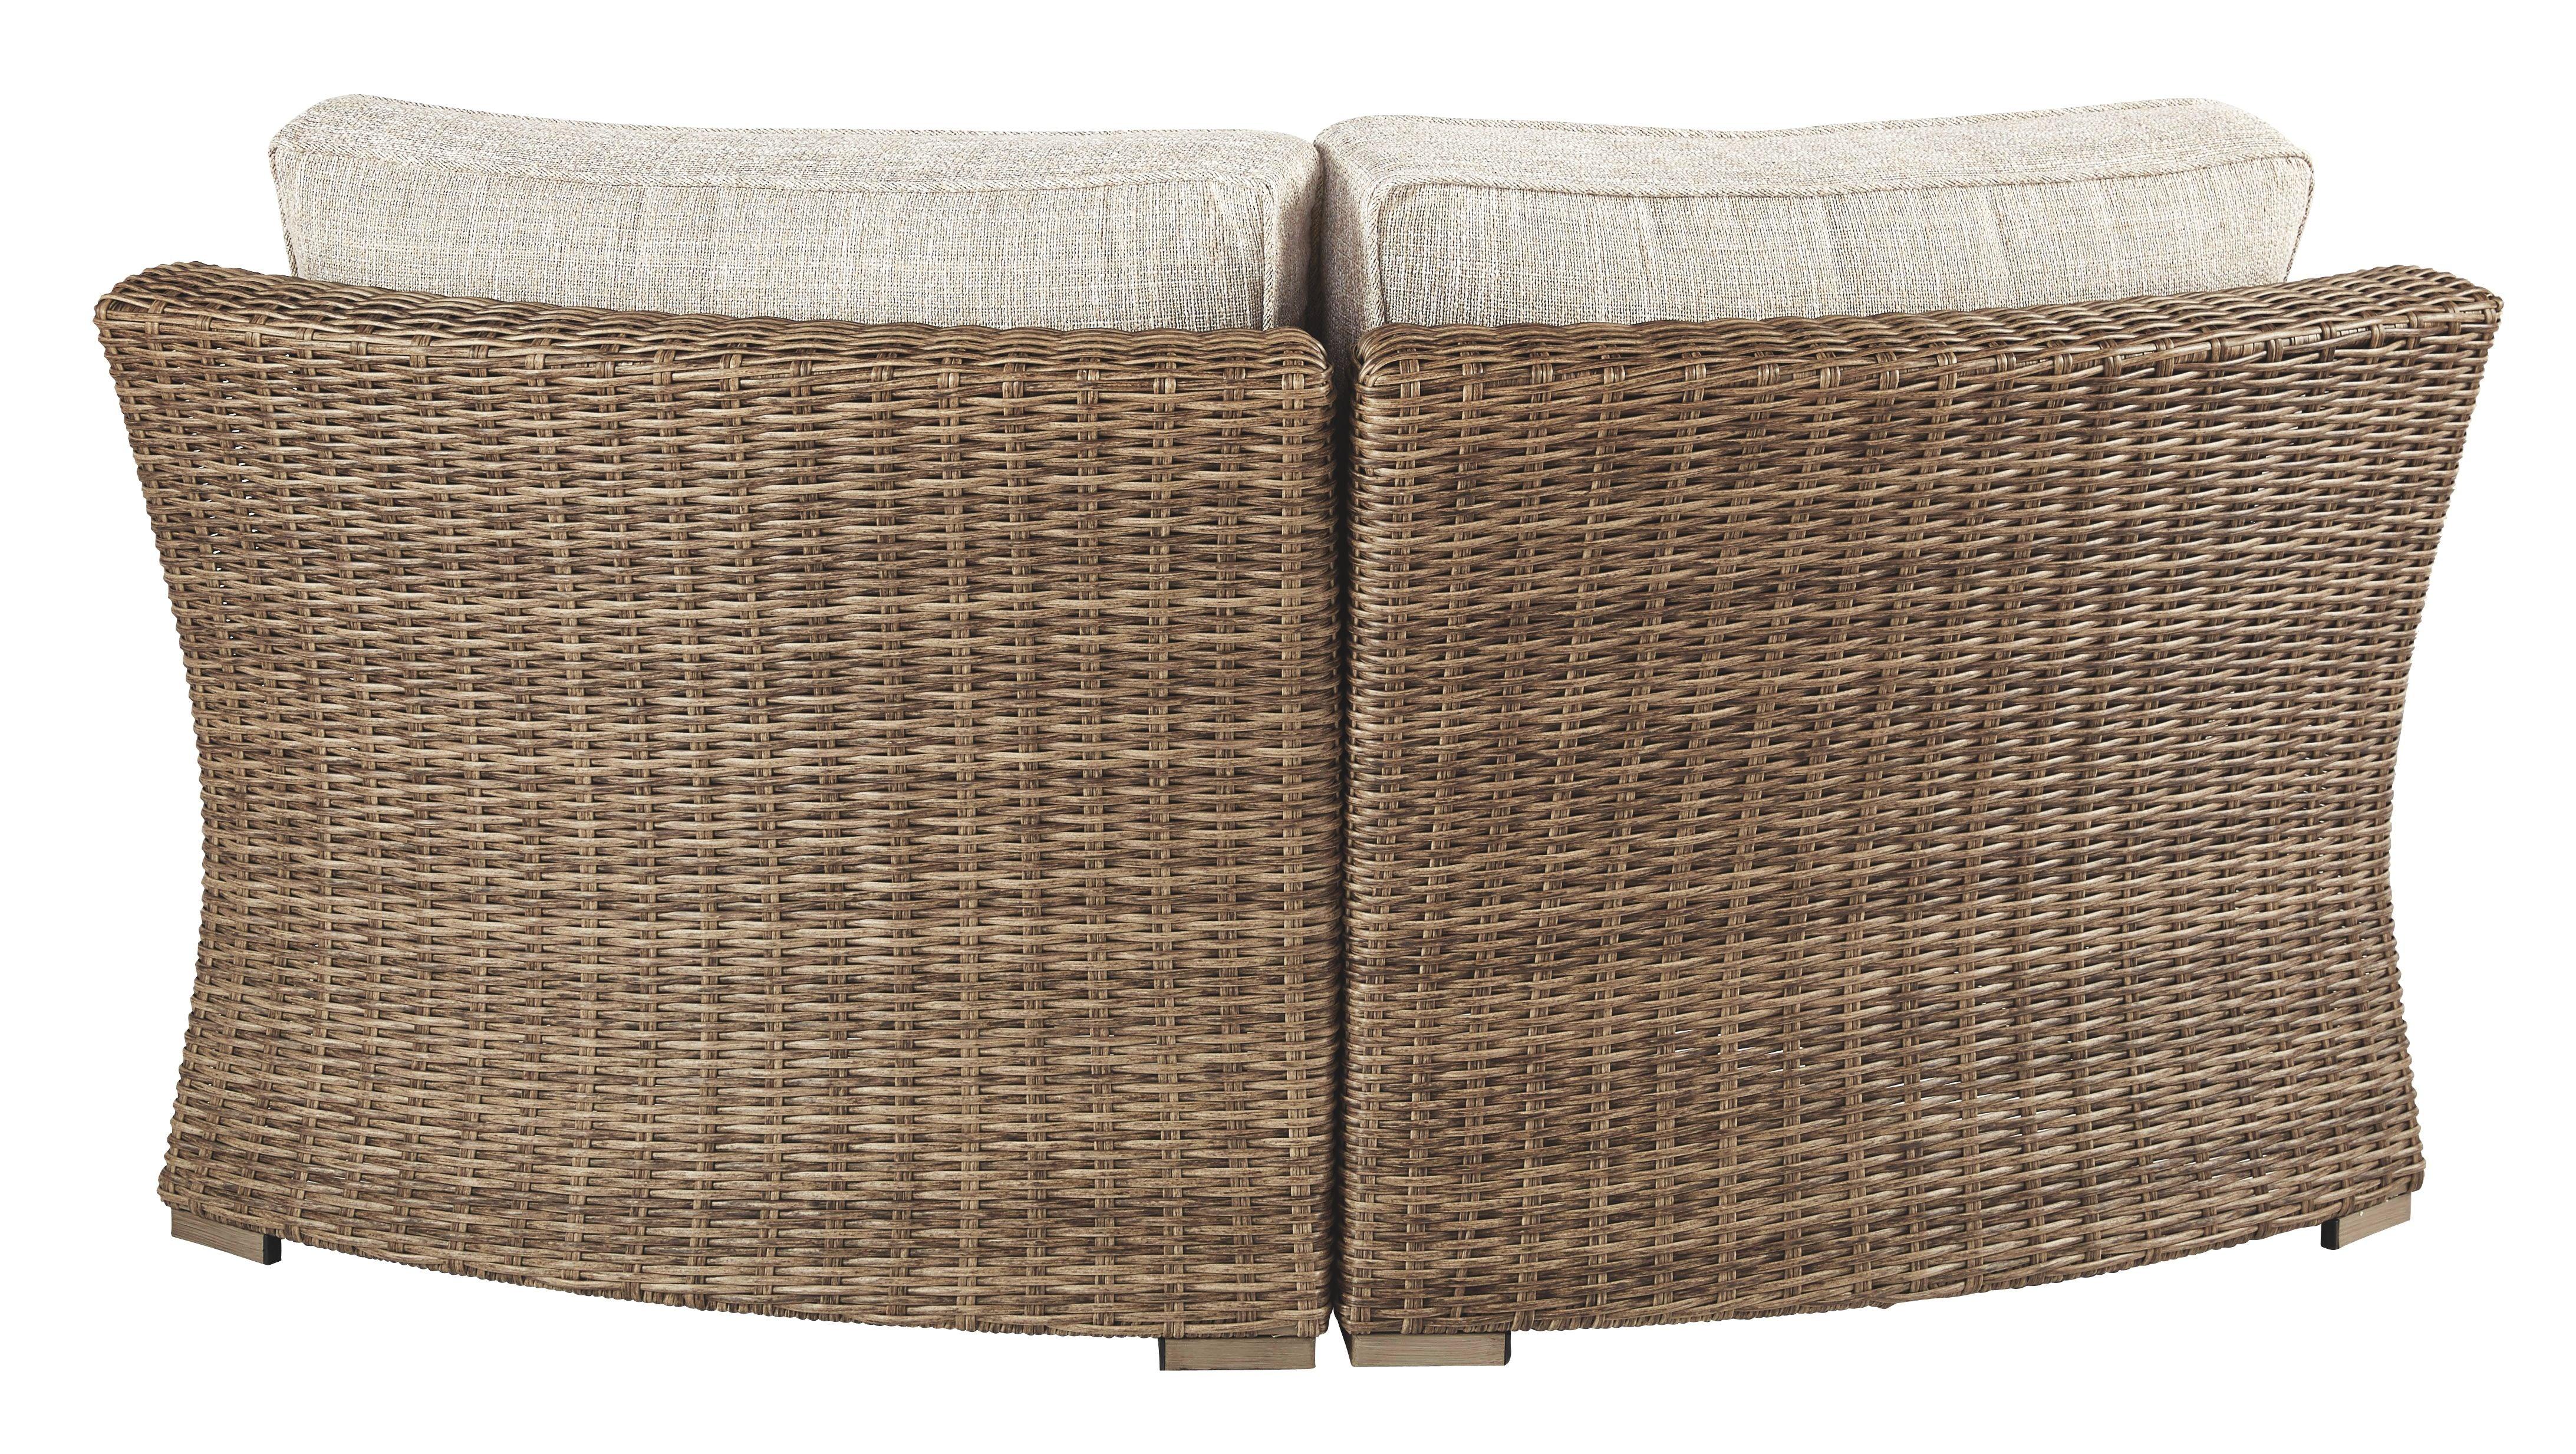 Ashley Furniture - Beachcroft - Beige - Curved Corner Chair W/Cushion - 5th Avenue Furniture